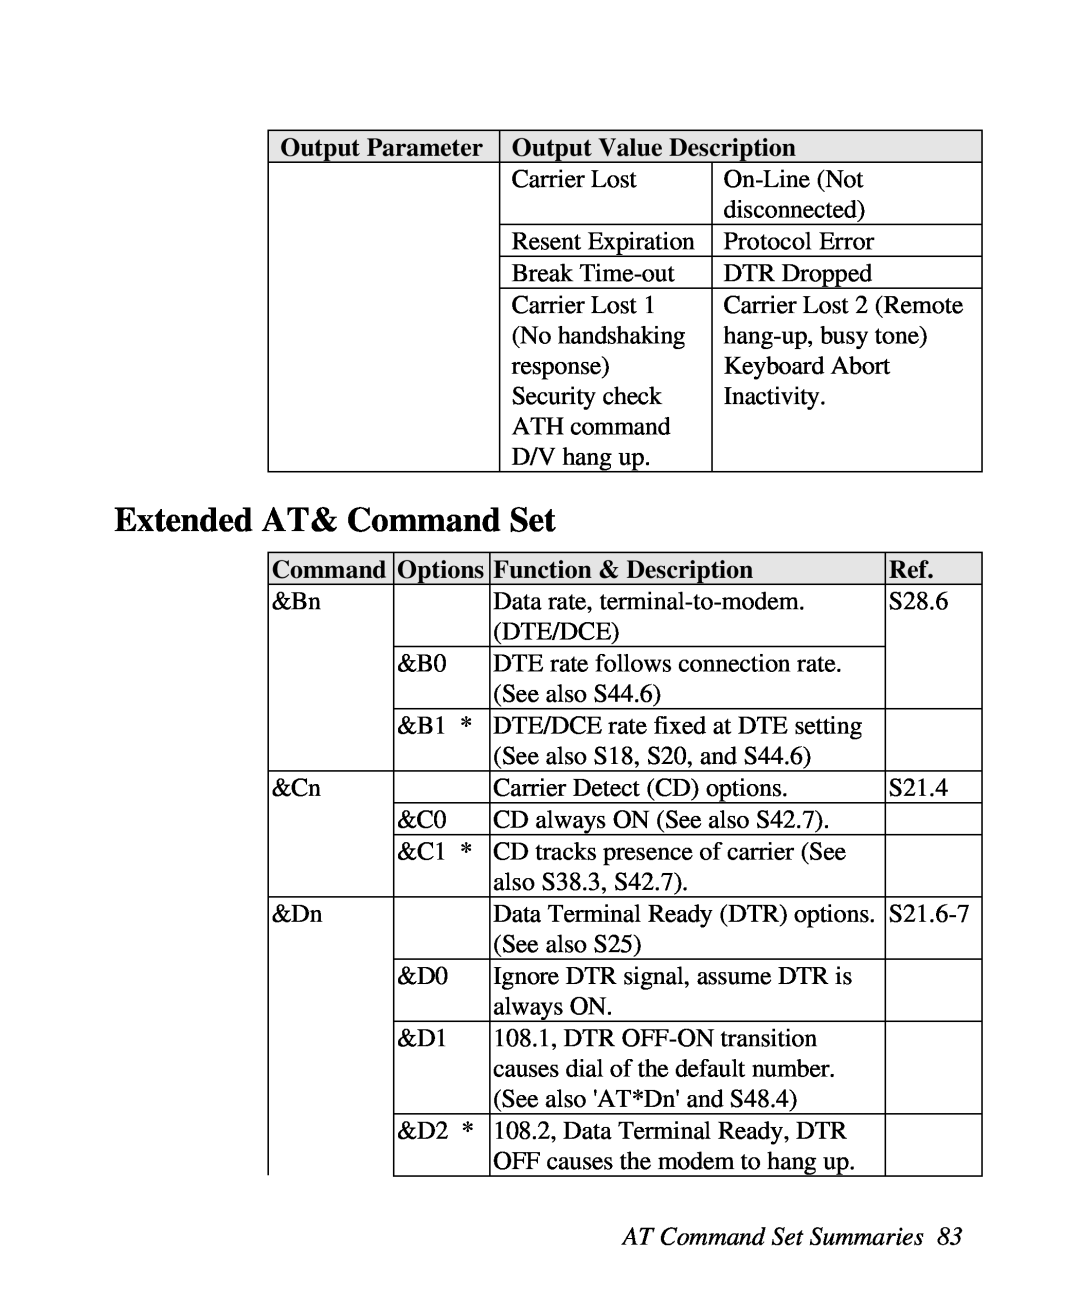 ZyXEL Communications U-336R/RE manual Extended AT& Command Set, Output Parameter, Output Value Description, Options 